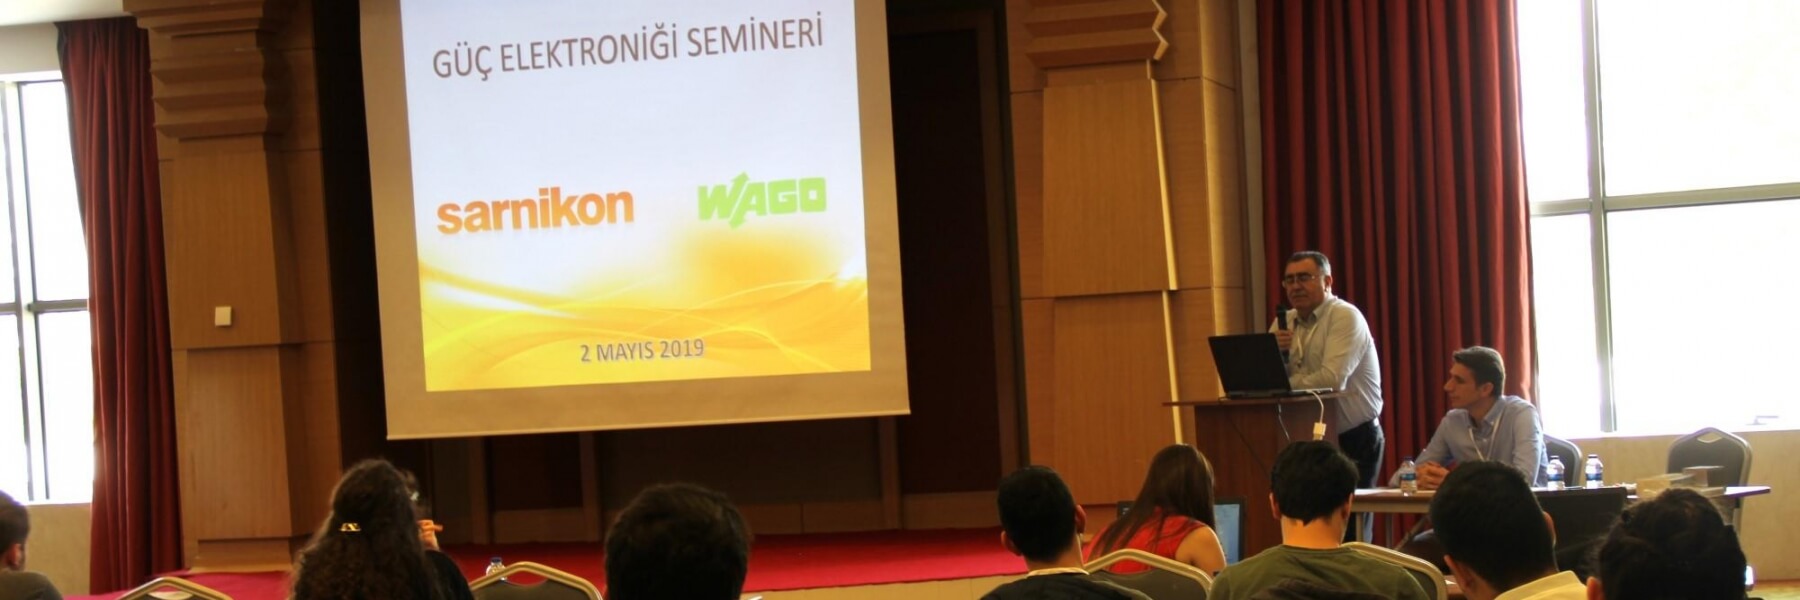 Wago & Sarnikon Power Electronics Seminar